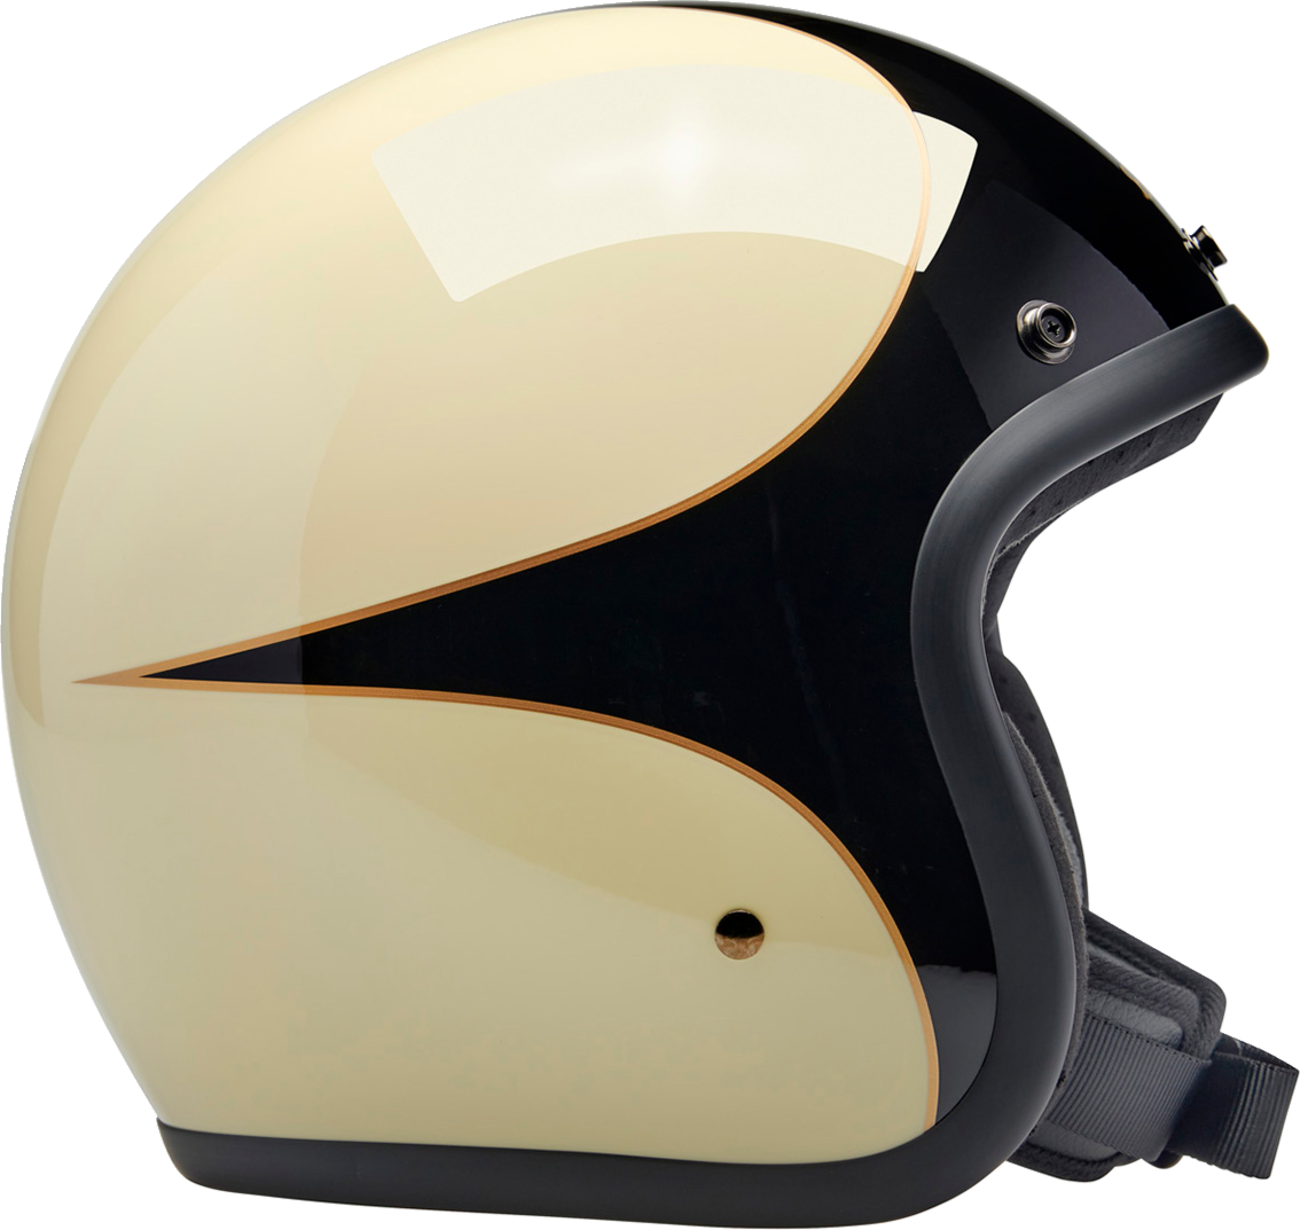 BILTWELL Bonanza Helmet - Gloss Vintage White/Black Scallop - Small 1001-559-202